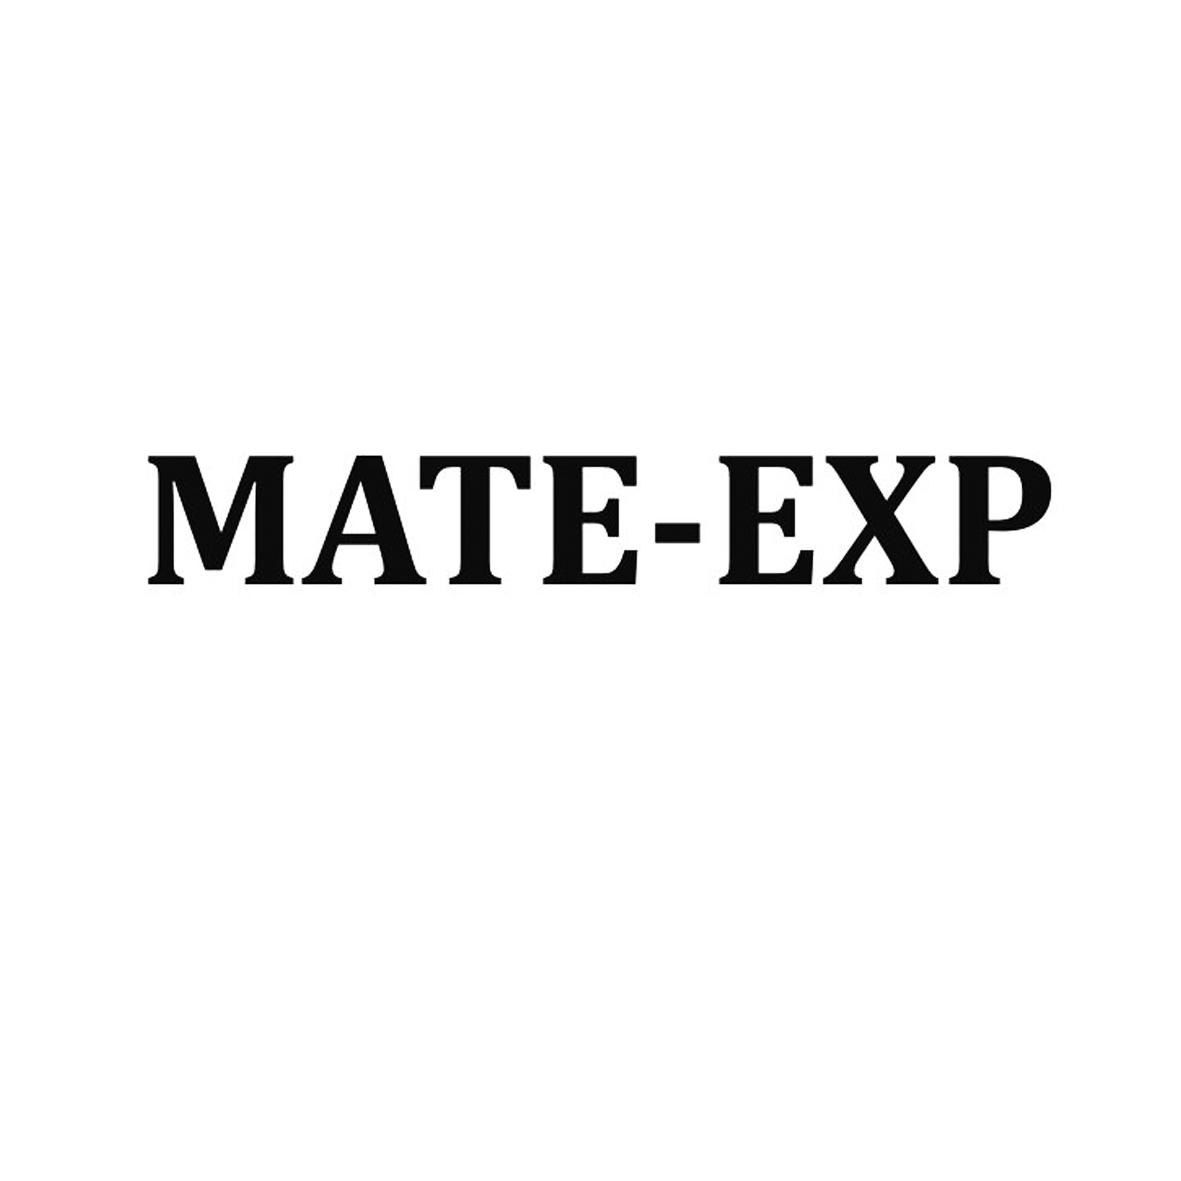 MATE-EXPlogo